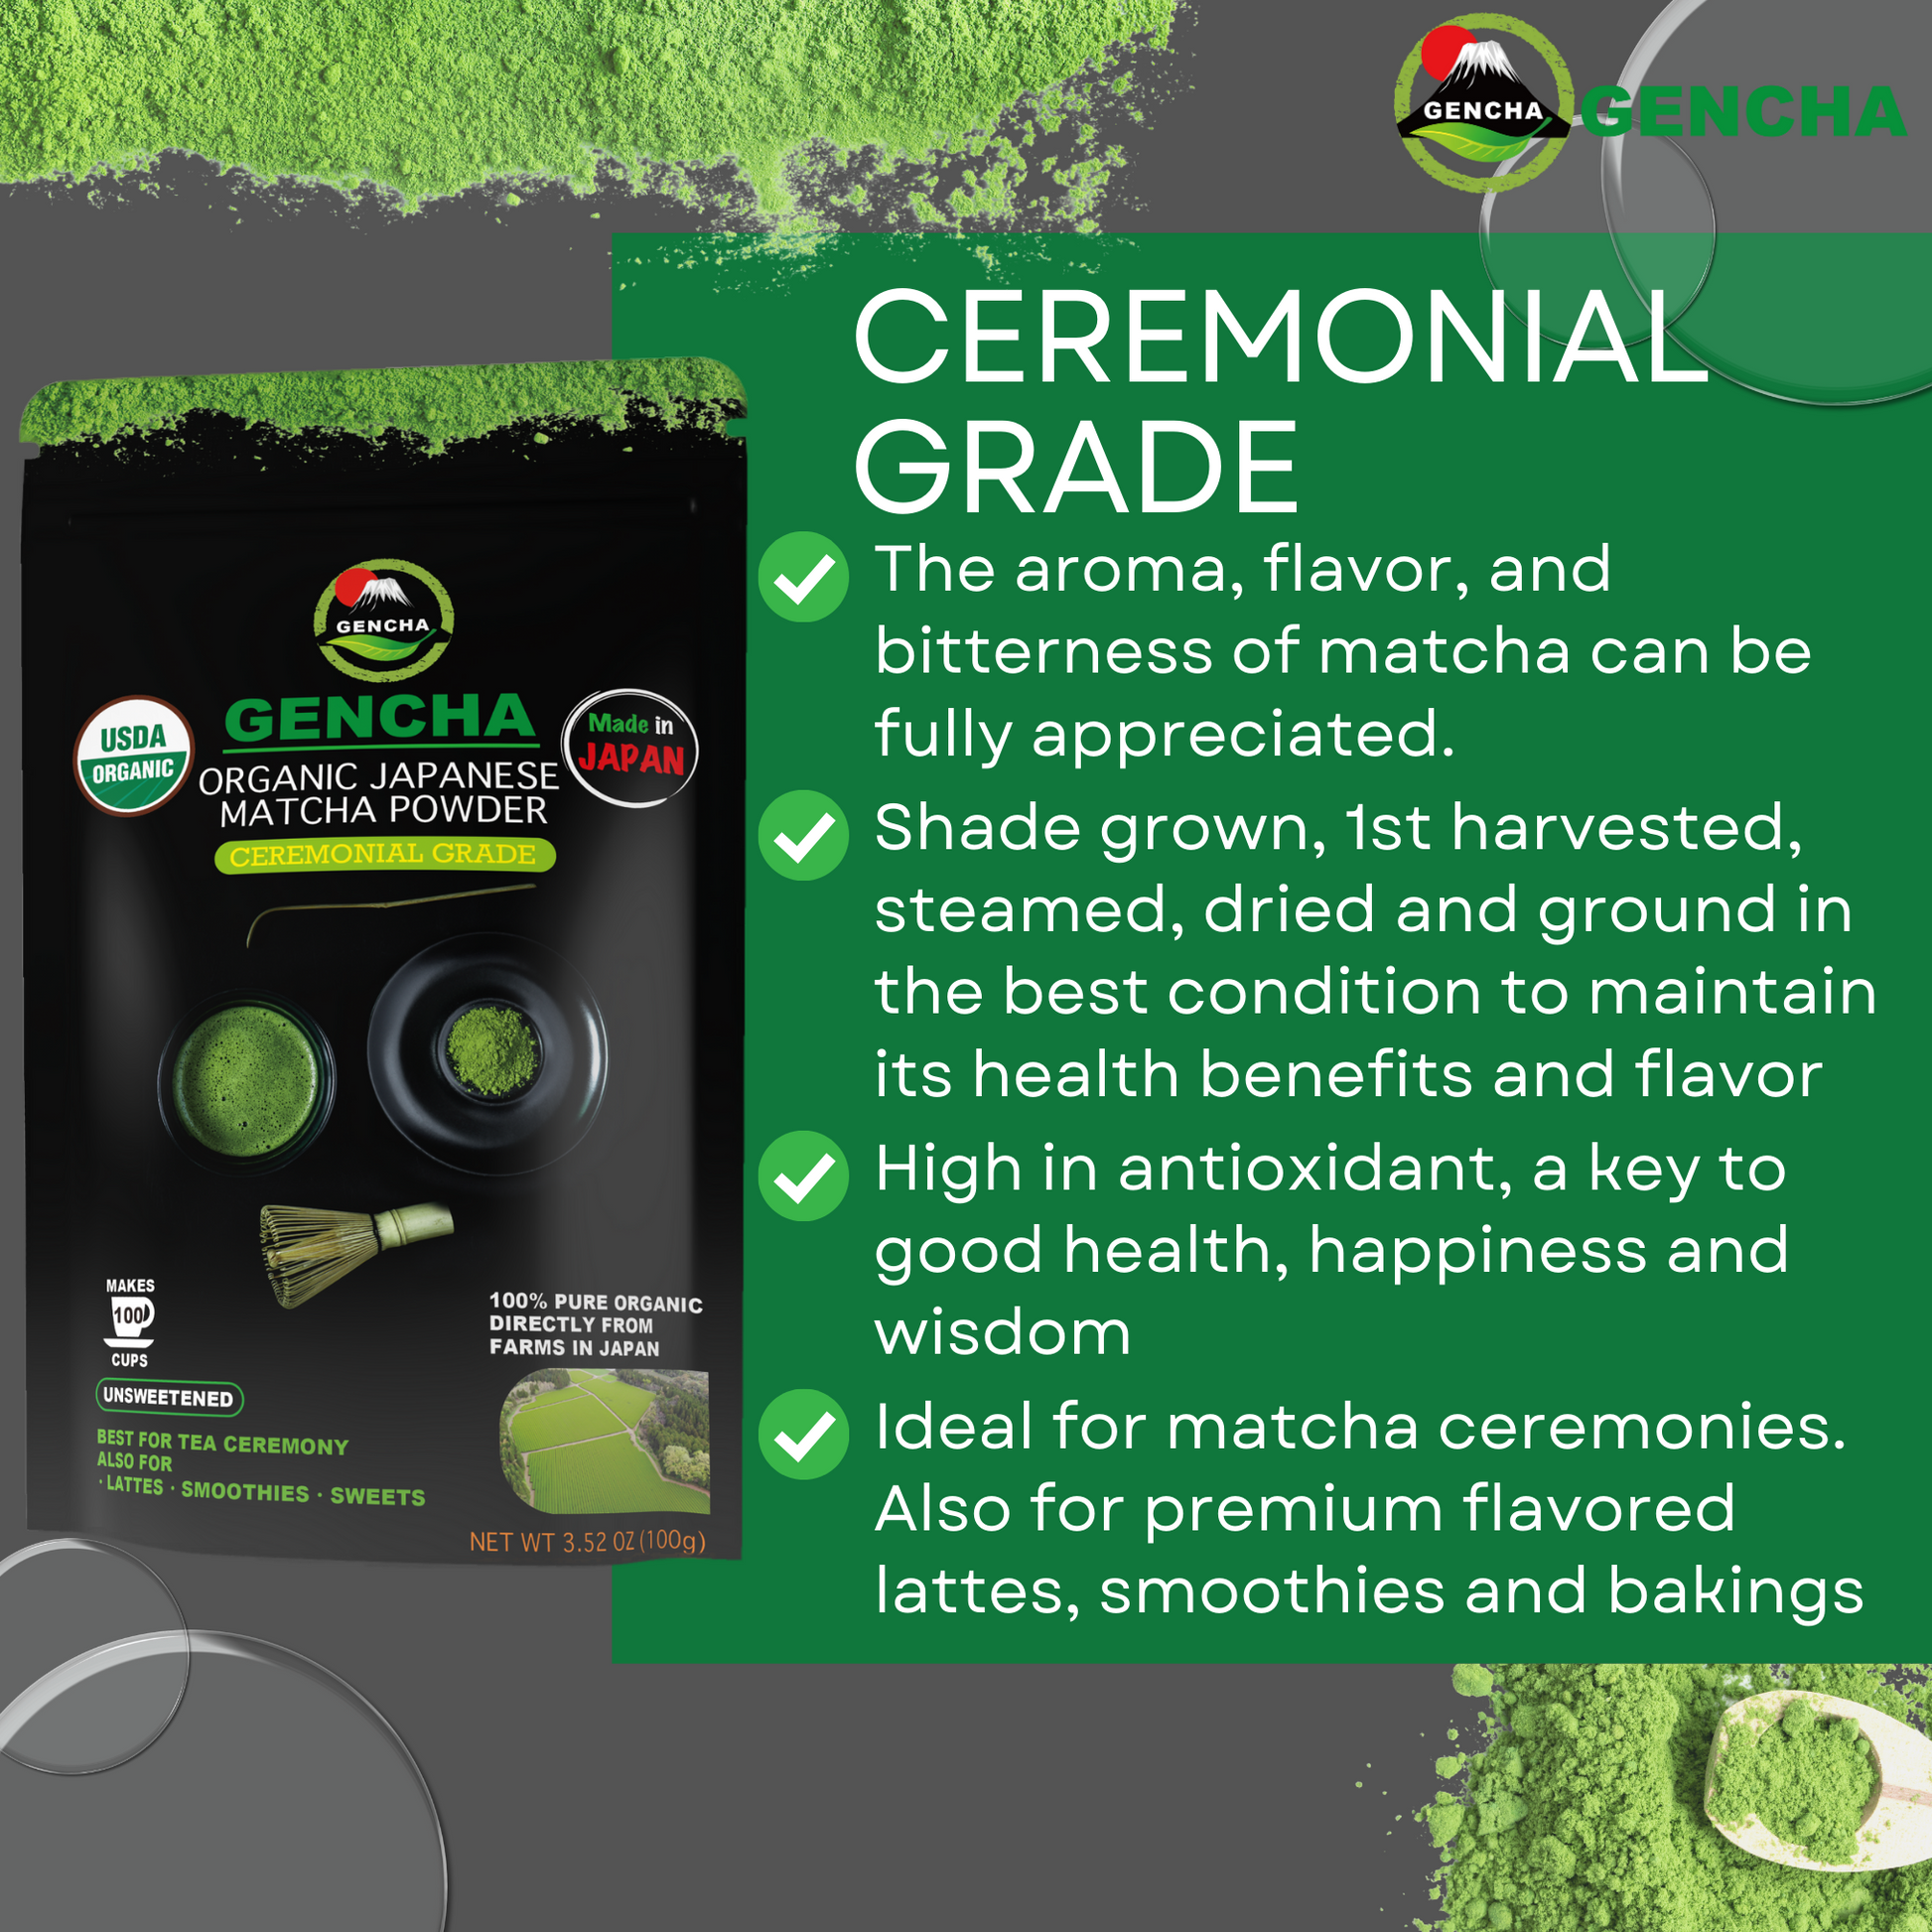 Organic Ceremonial Matcha  Matcha Direct – MATCHA DIRECT